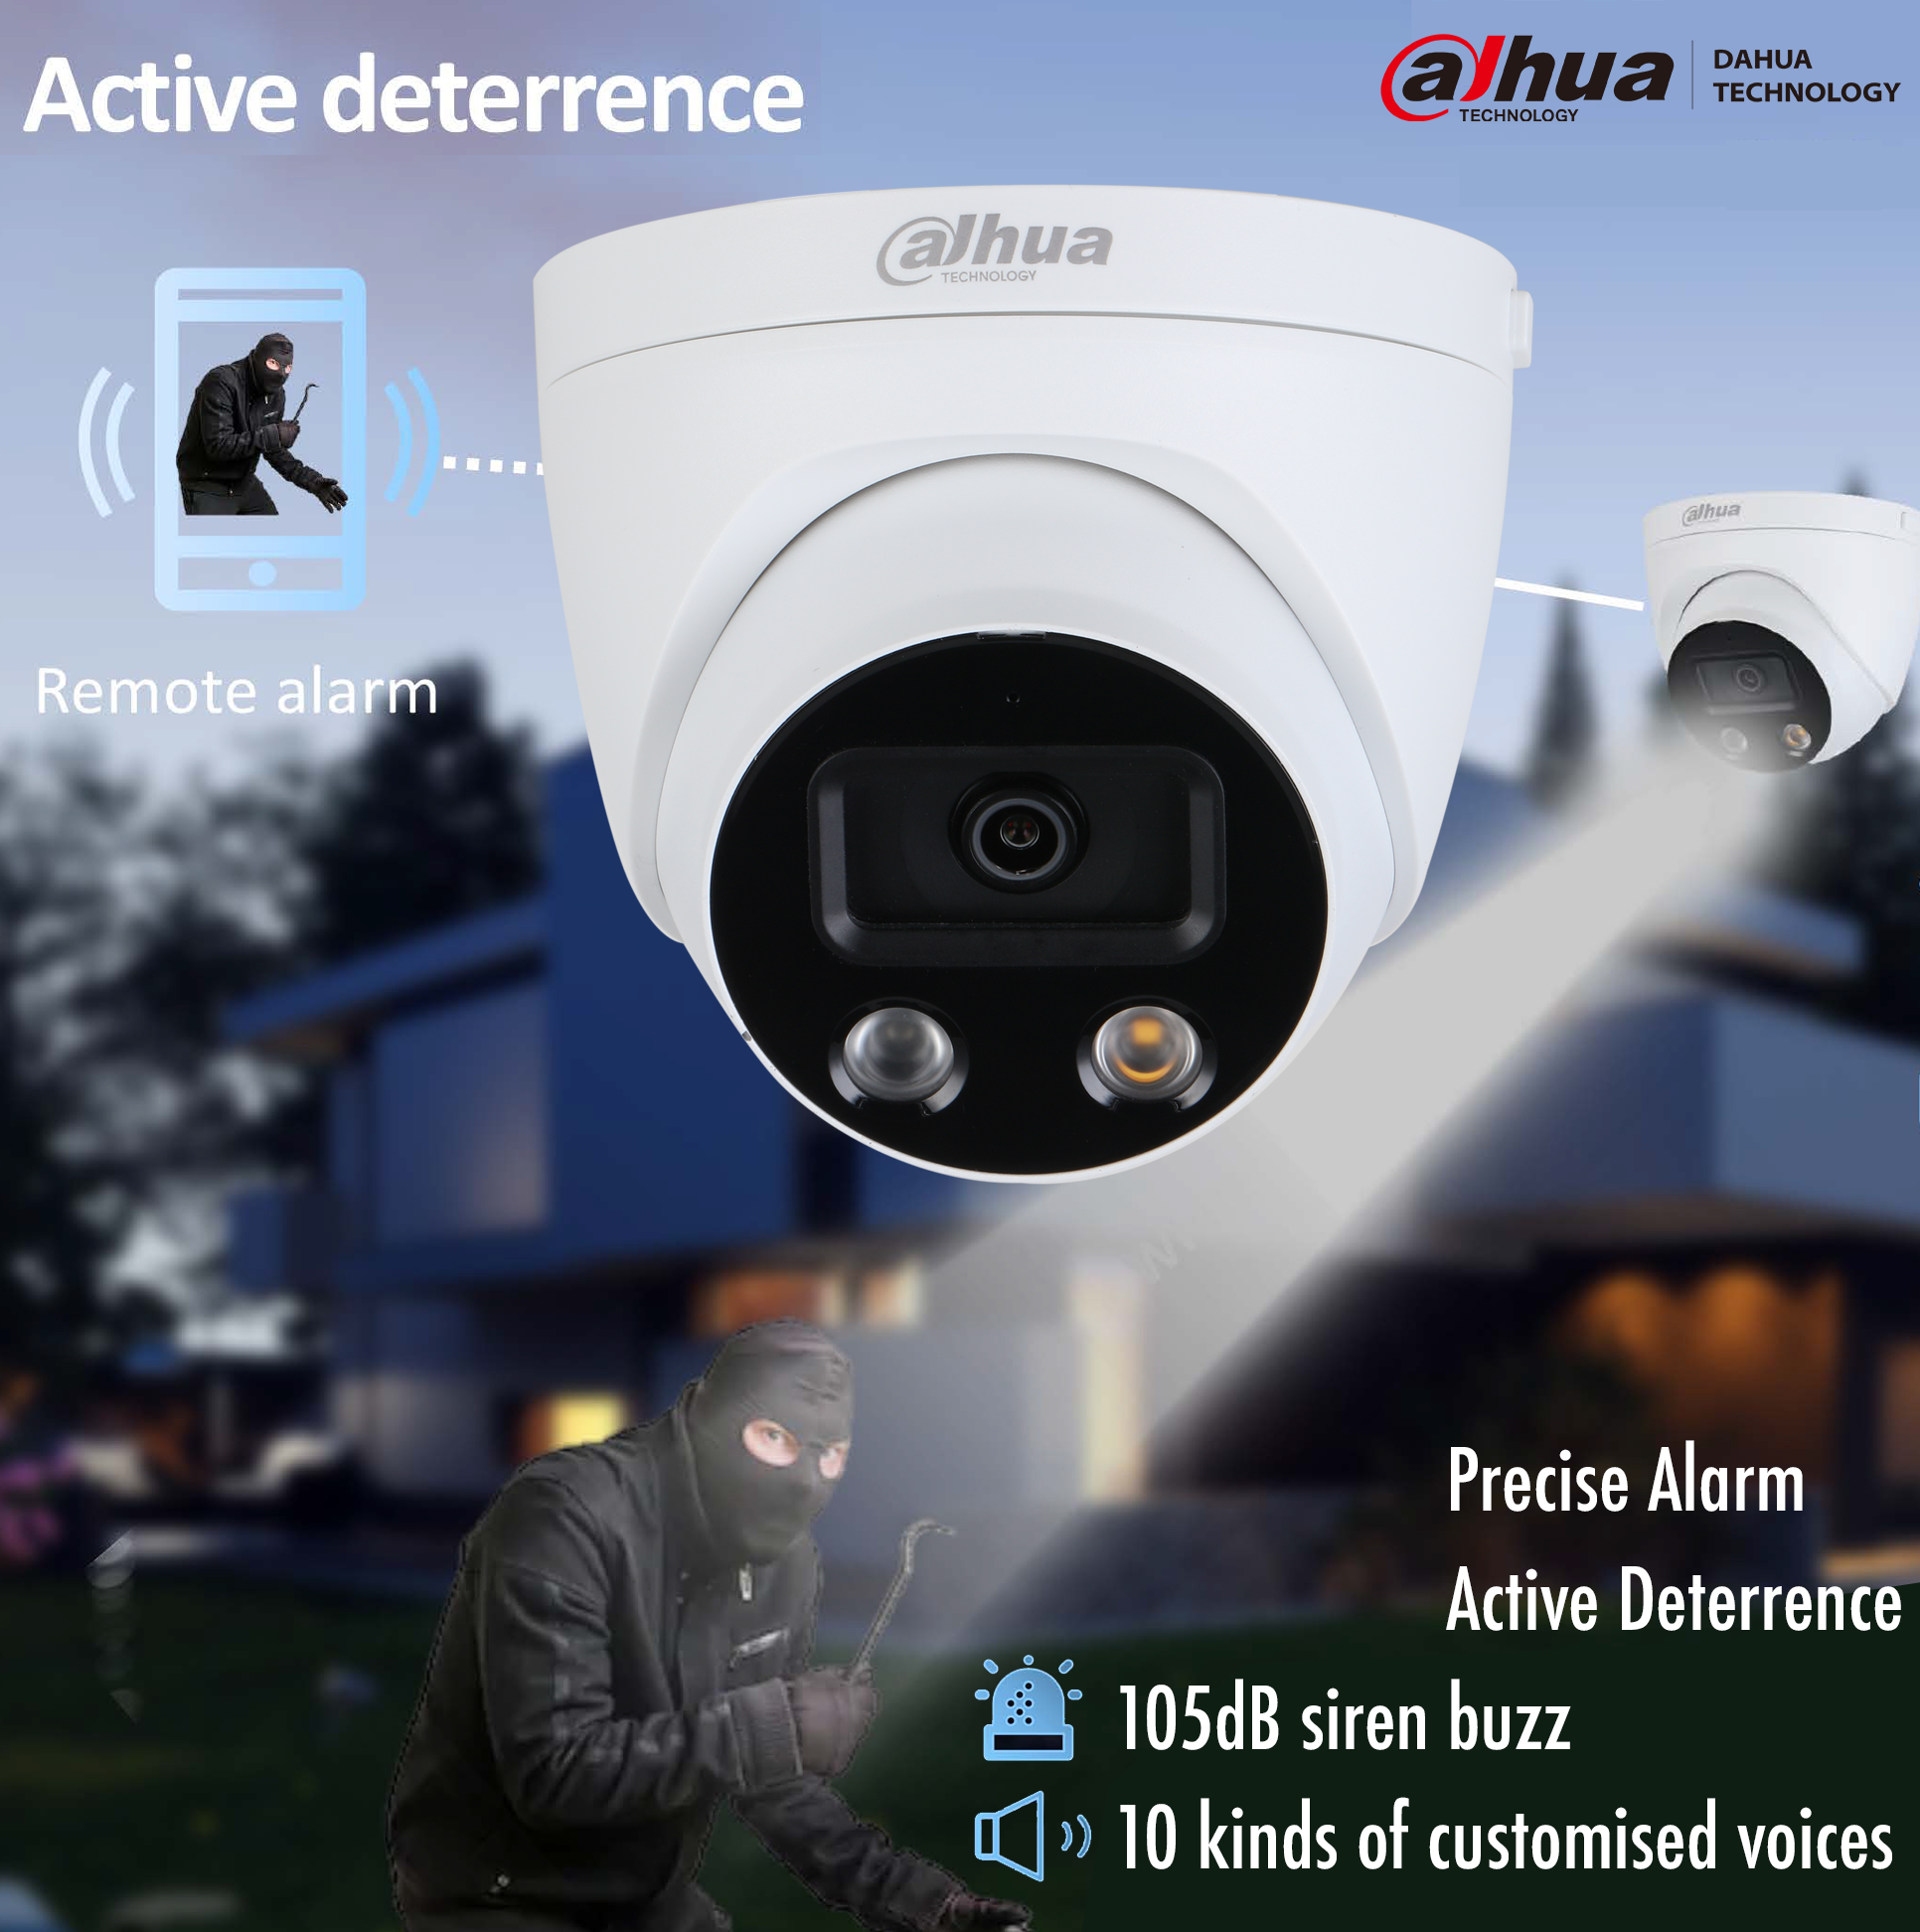 dahua active deterrence camera